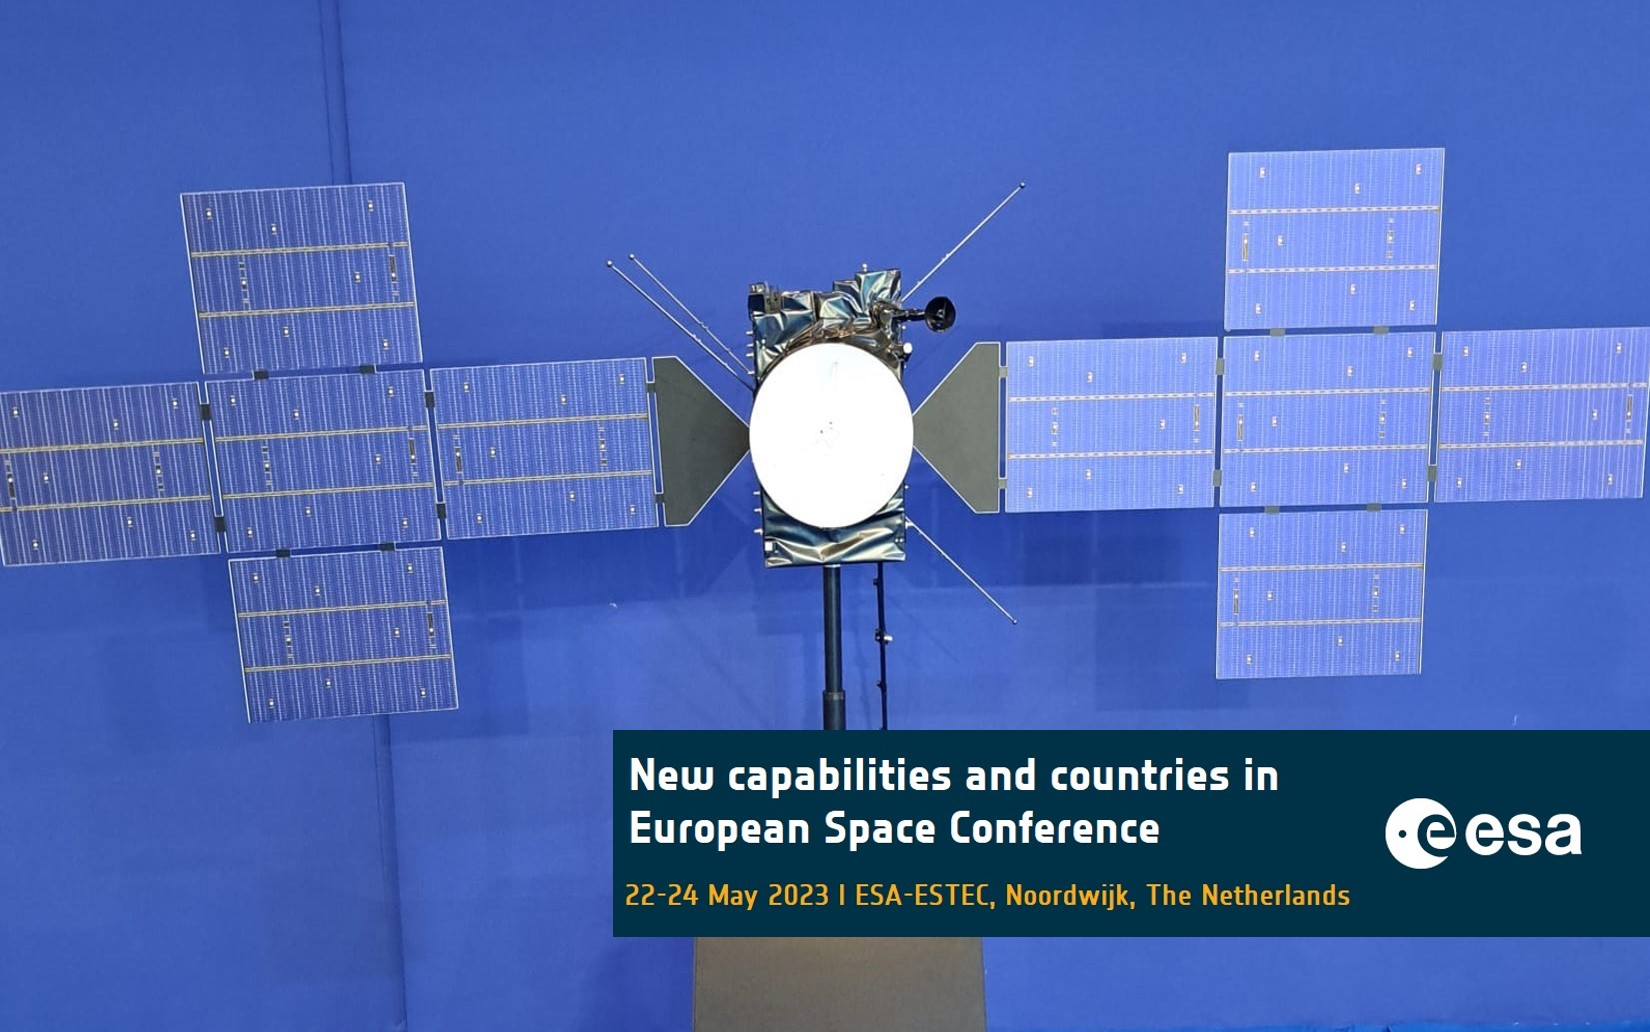 Конференция „Нови възможности и държави в Европейския космос“ 2023 (Нидерландия)